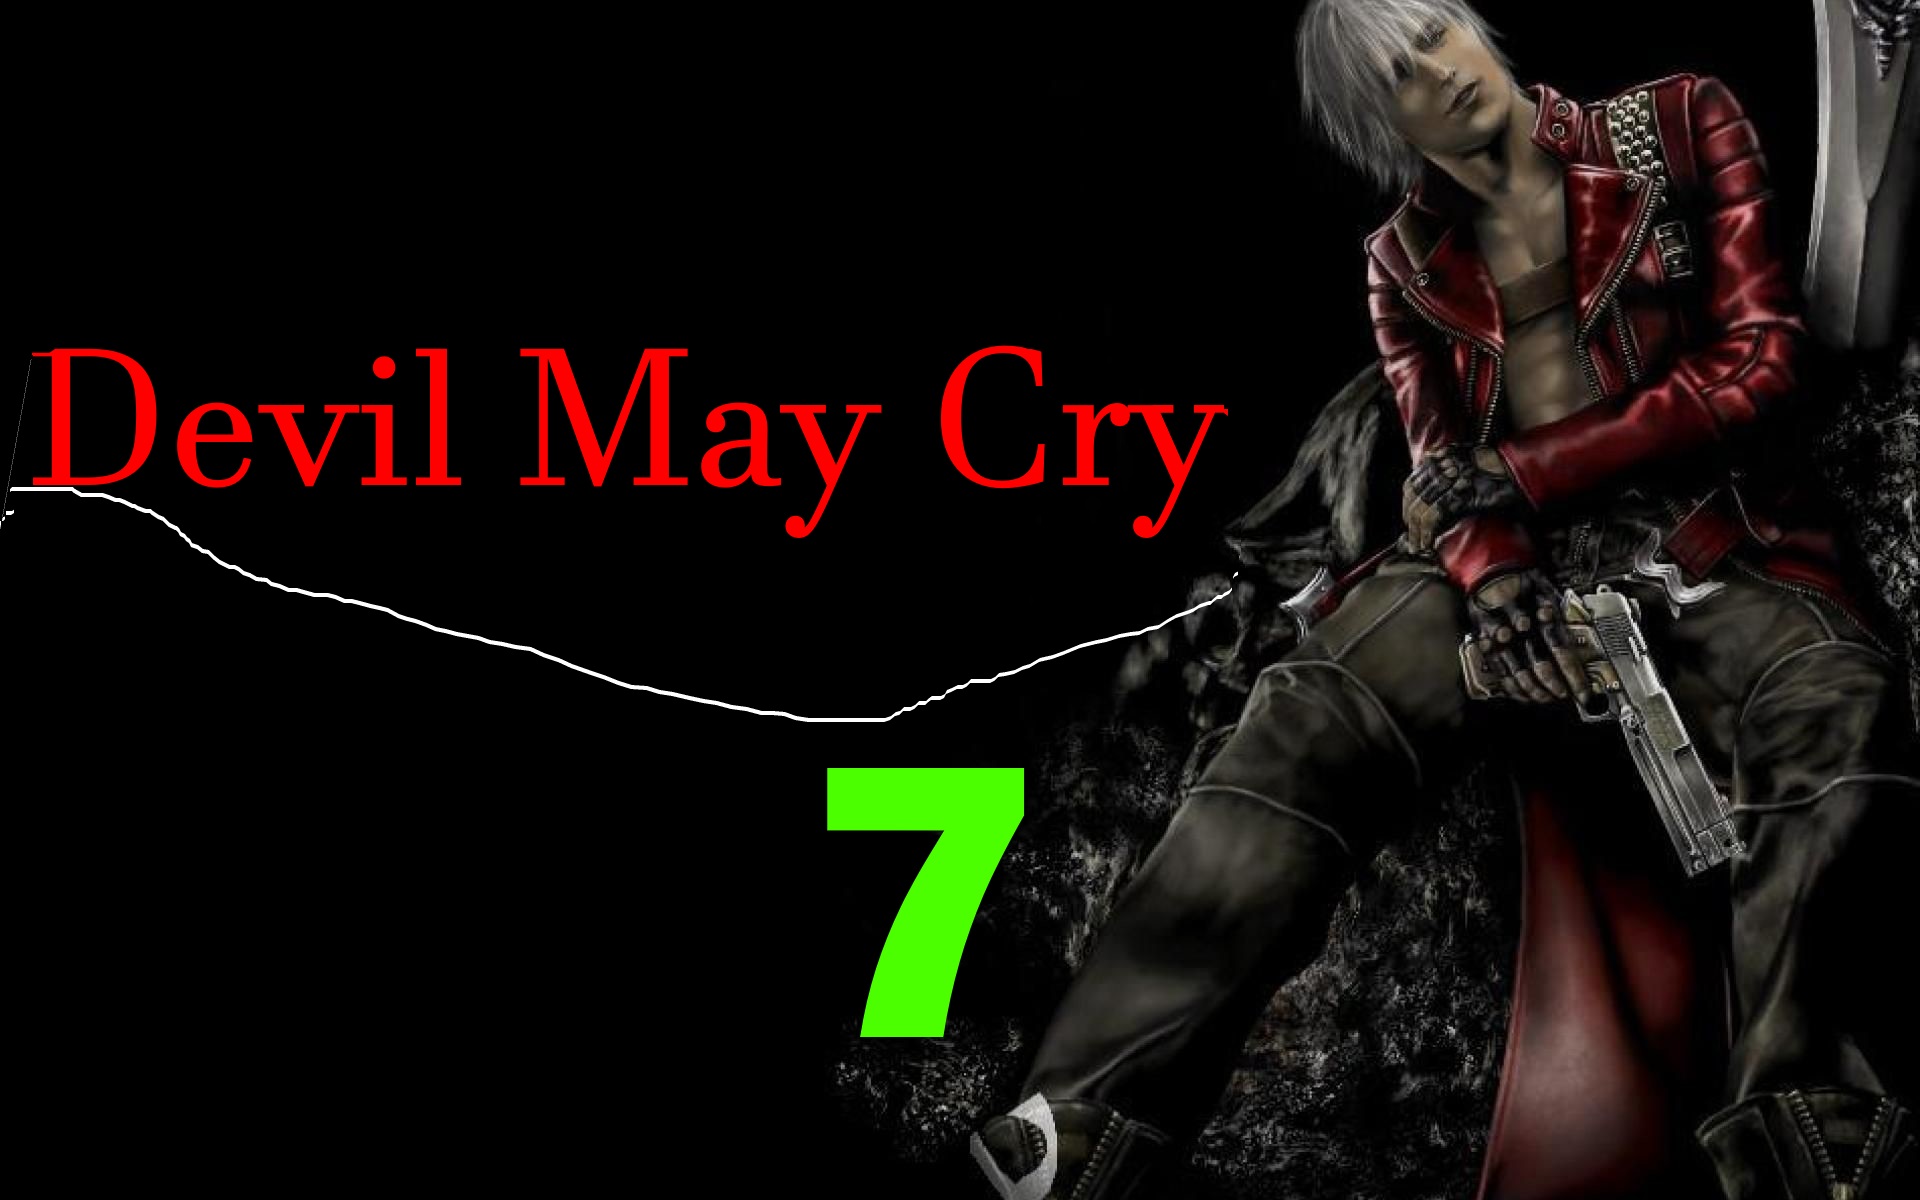 Devil may cry новелла. Данте 3 часть. Devil May Cry 3: Dante’s Awakening. Мир демонов DMC 3. Обои на рабочий стол Devil May Cry.